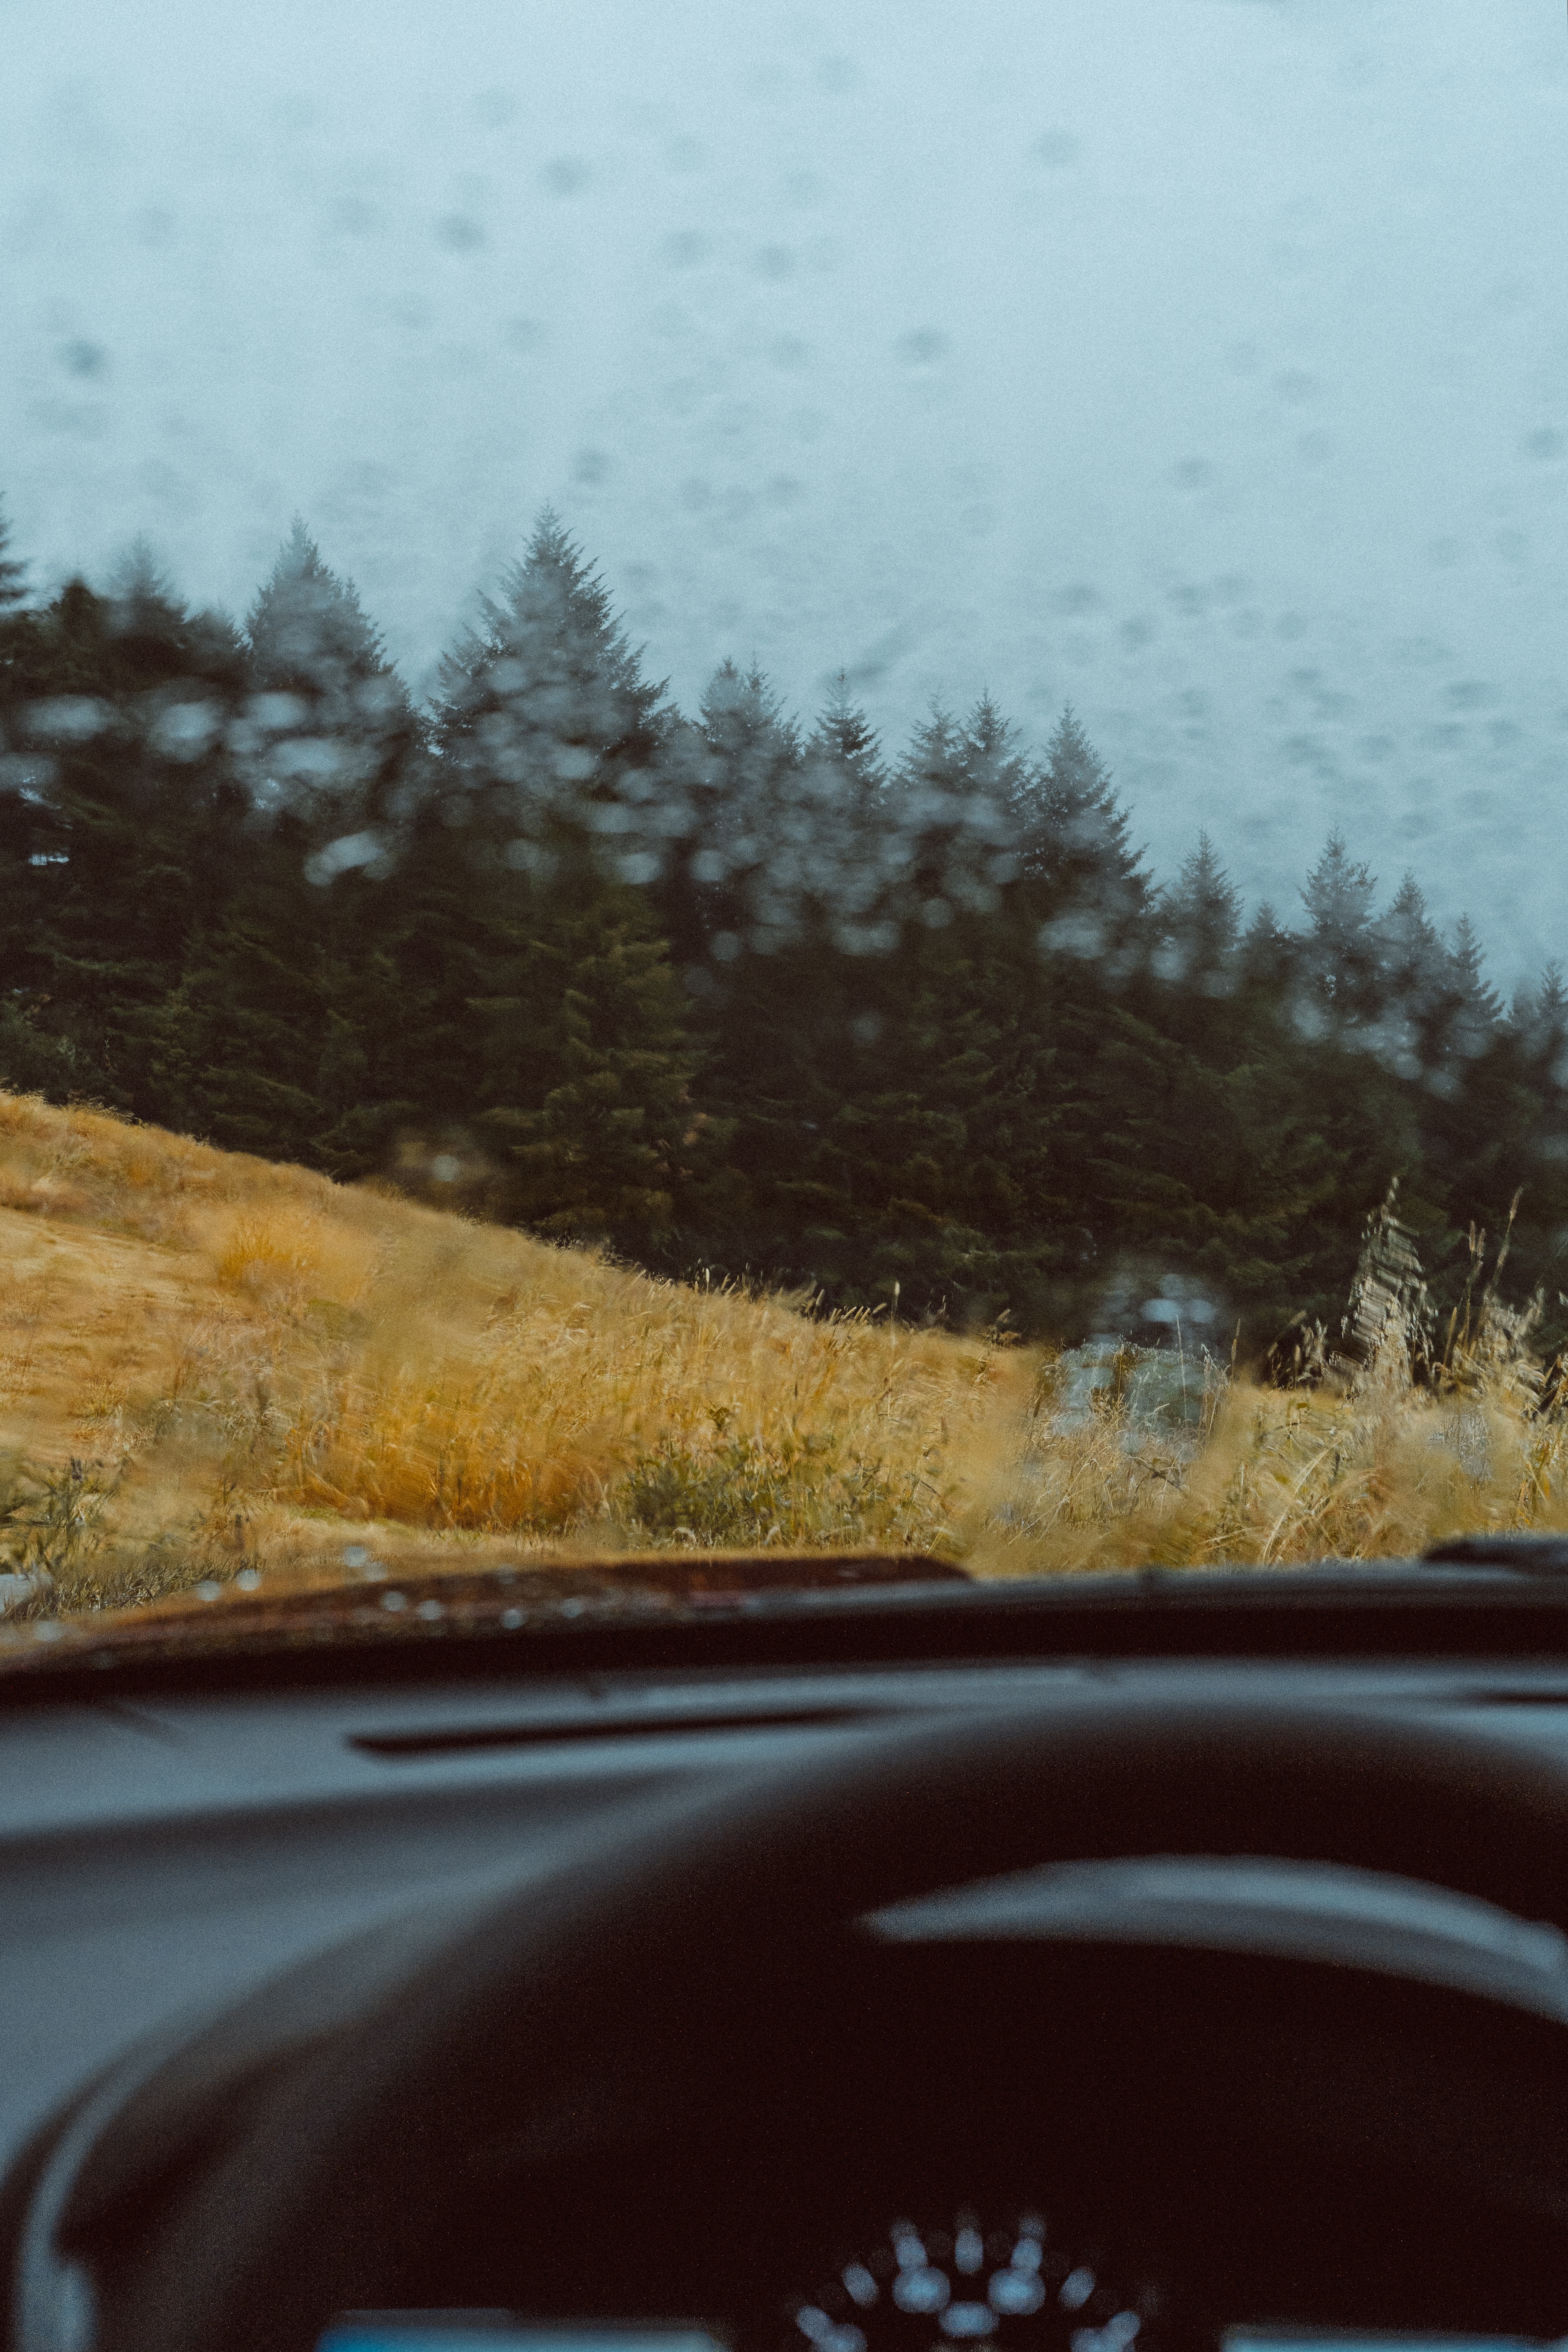 rain, miscellanea, miscellaneous, forest, car, machine, glass, view